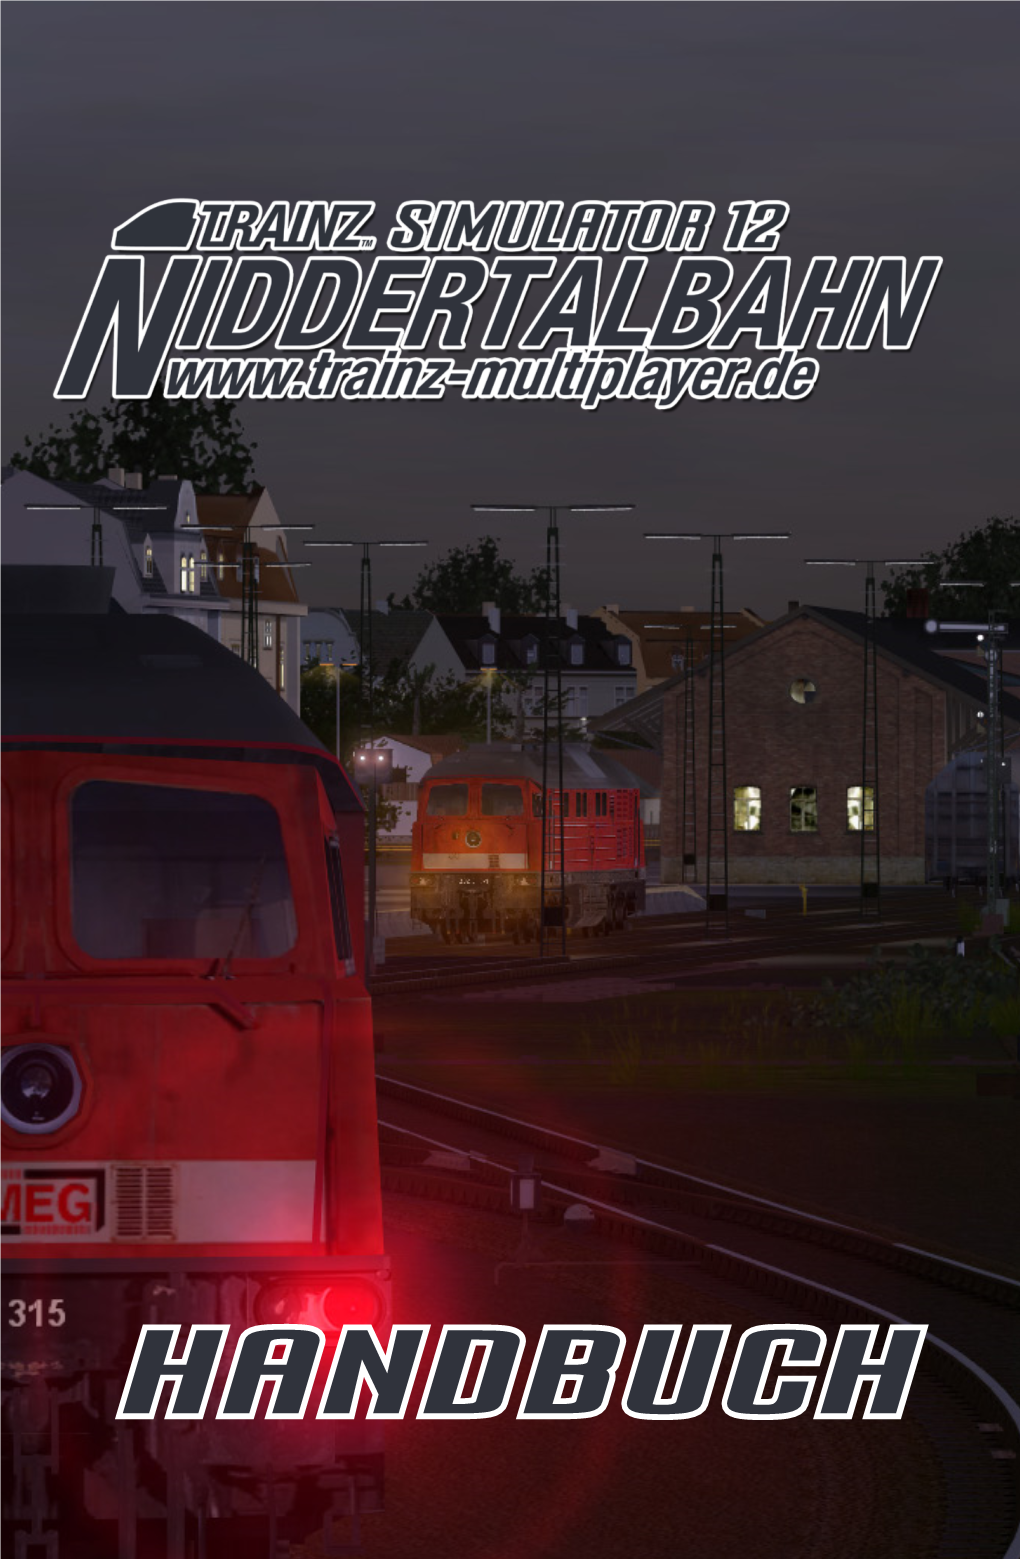 Niddertalbahn Handbuch.Pdf